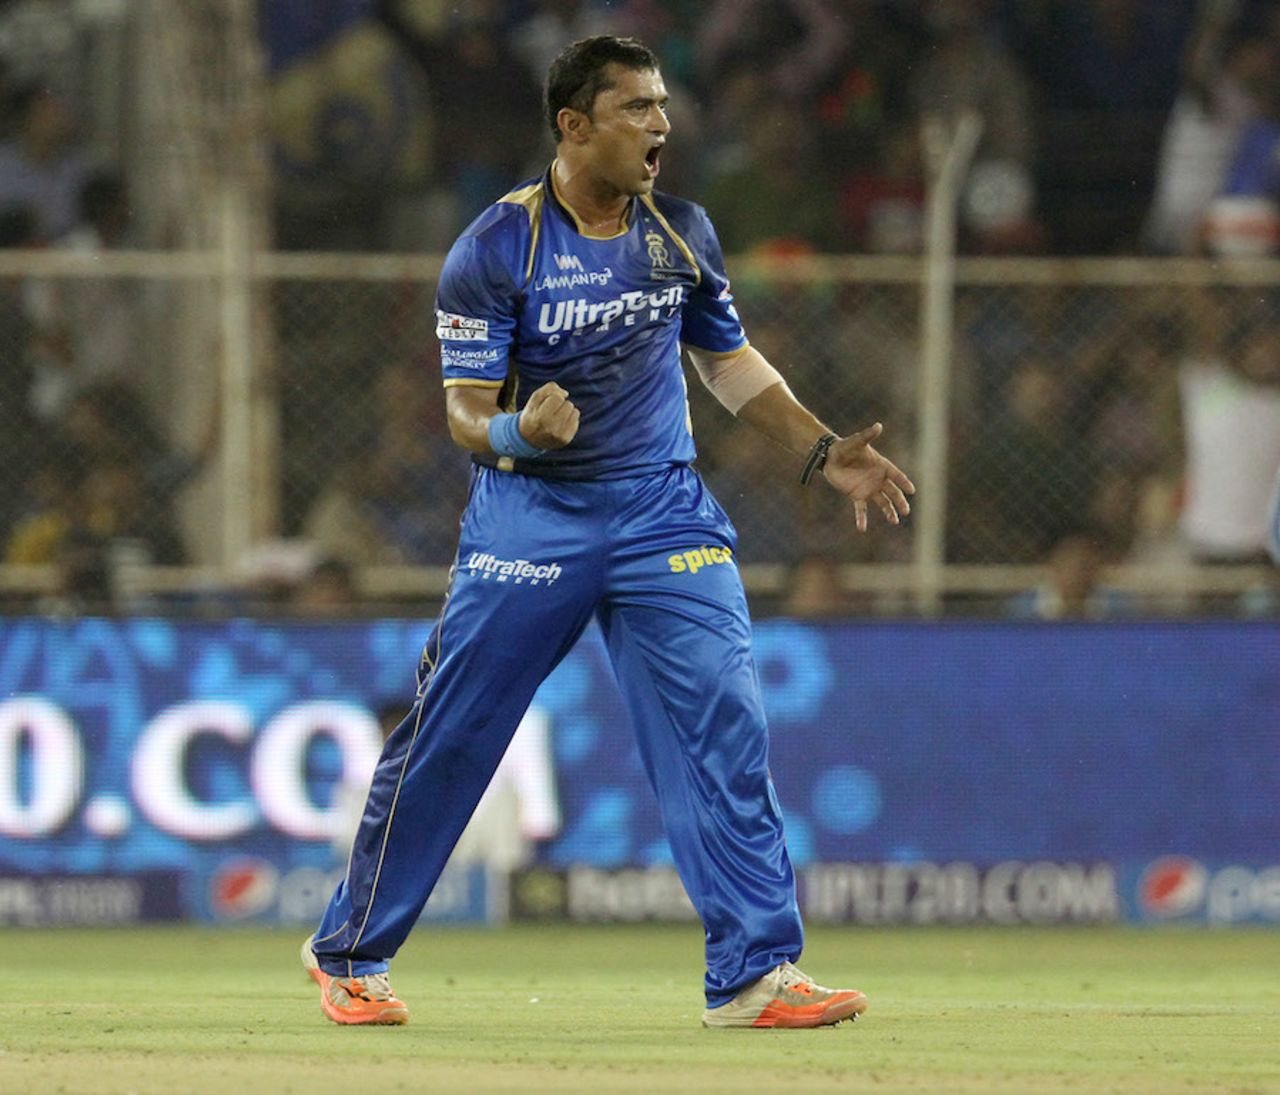 Pravin Tambe struck in his first over, Rajasthan Royals v Mumbai Indians, IPL 2015, Ahmedabad, April 14, 2015